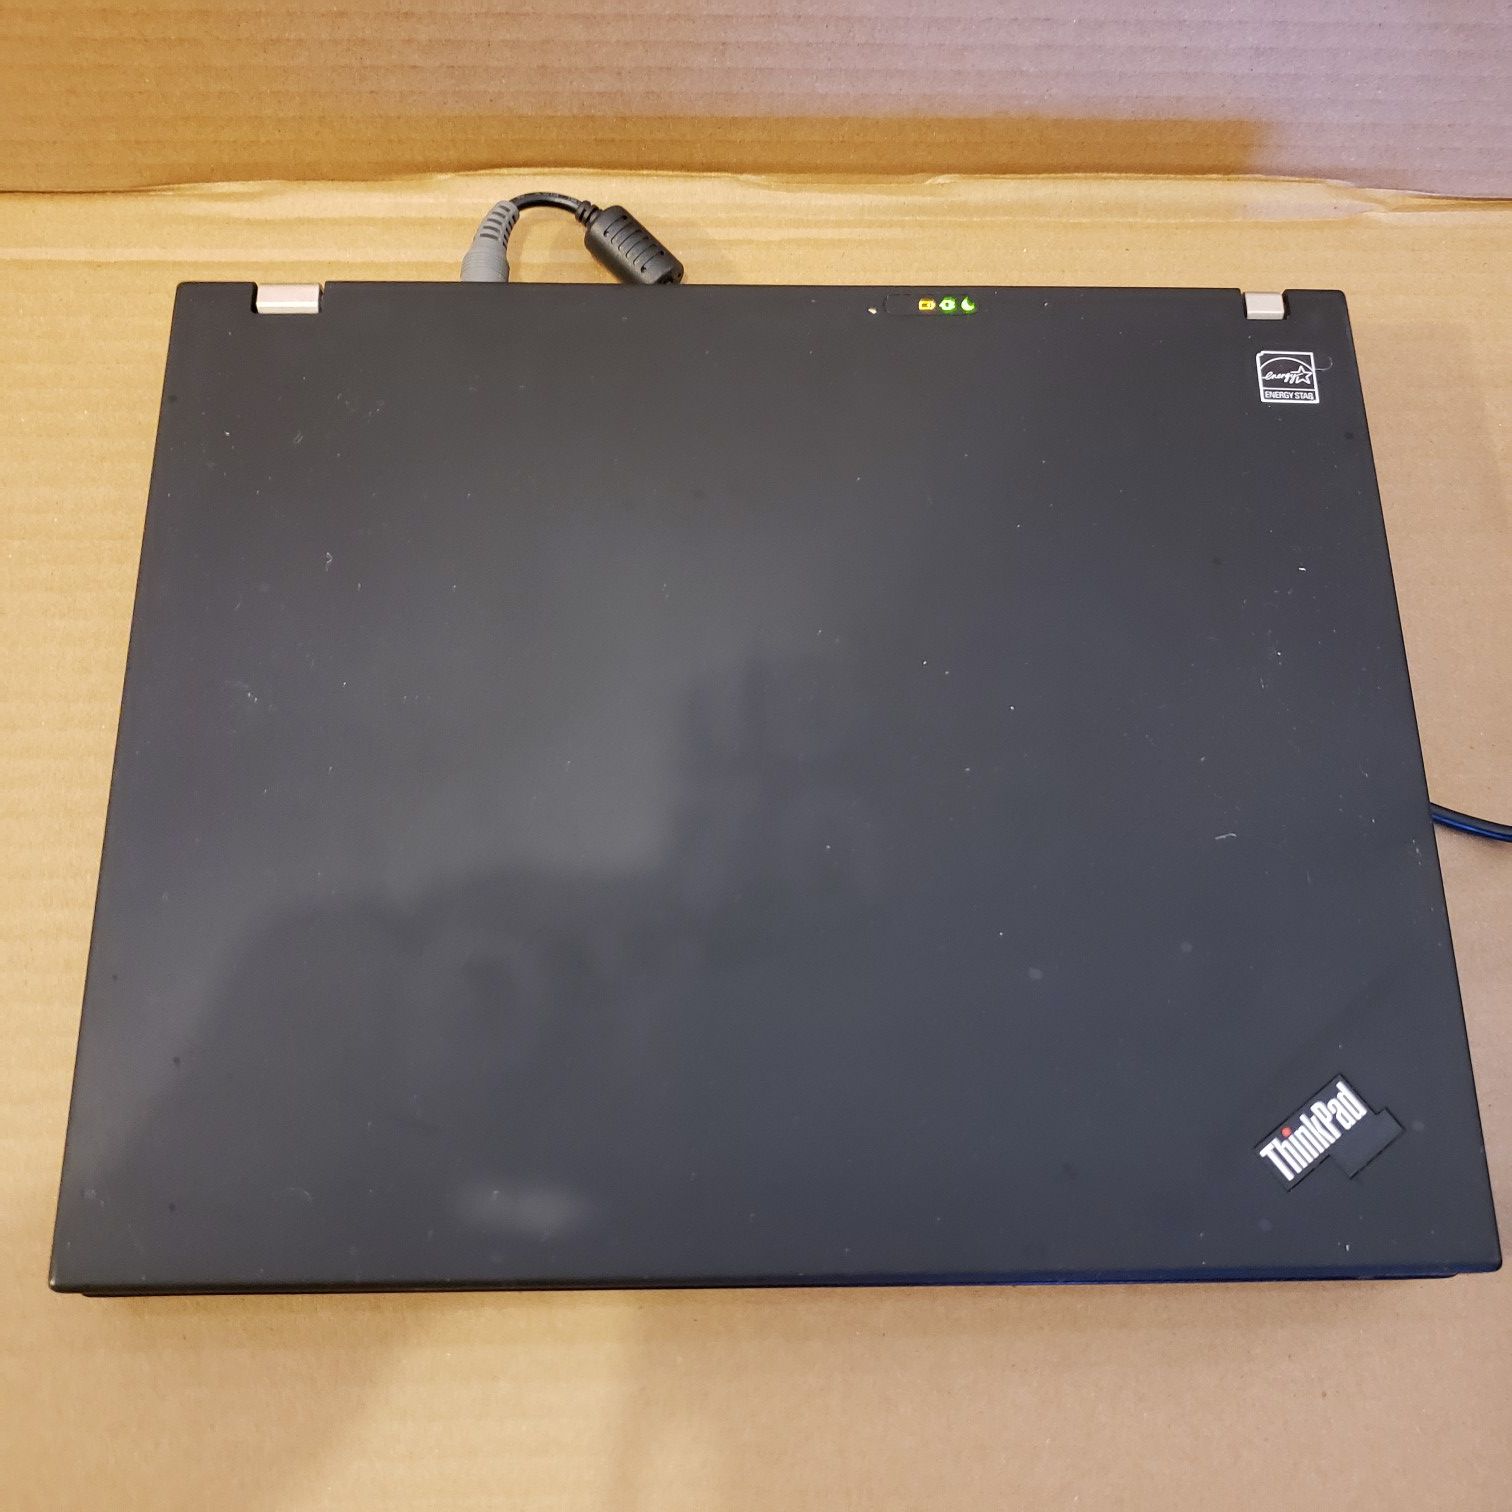 Lenovo T61 ThinkPad Laptop Computer